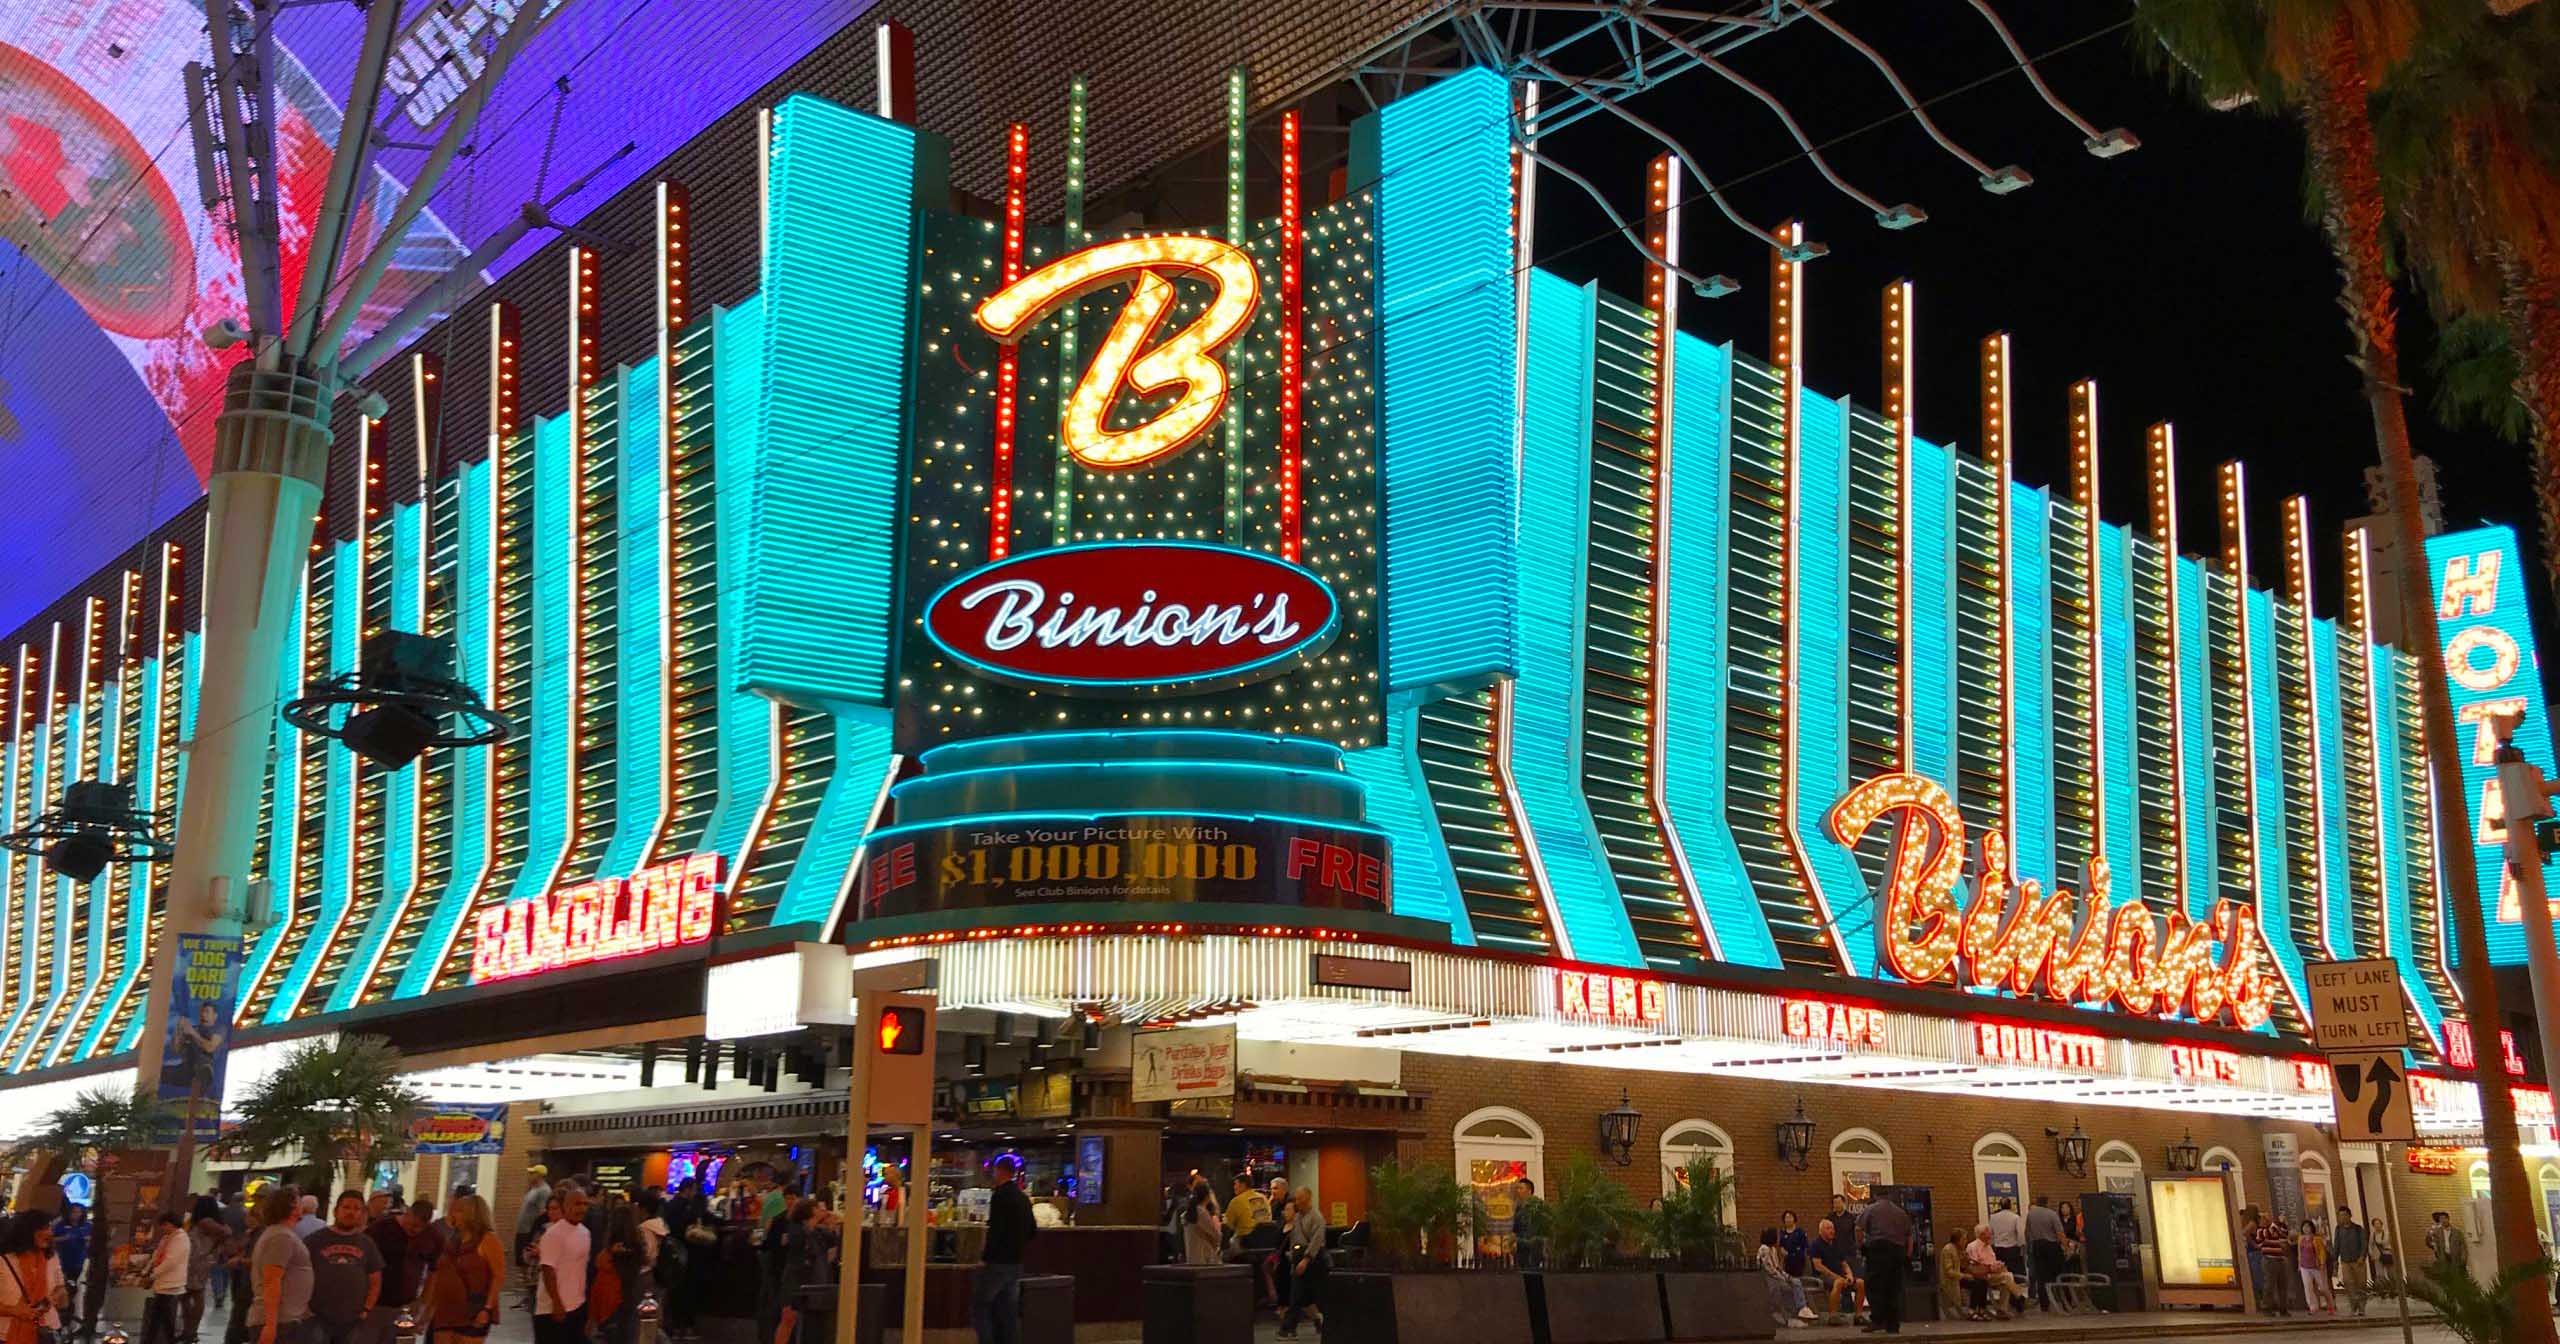 Binion's casino and hotel Las Vegas